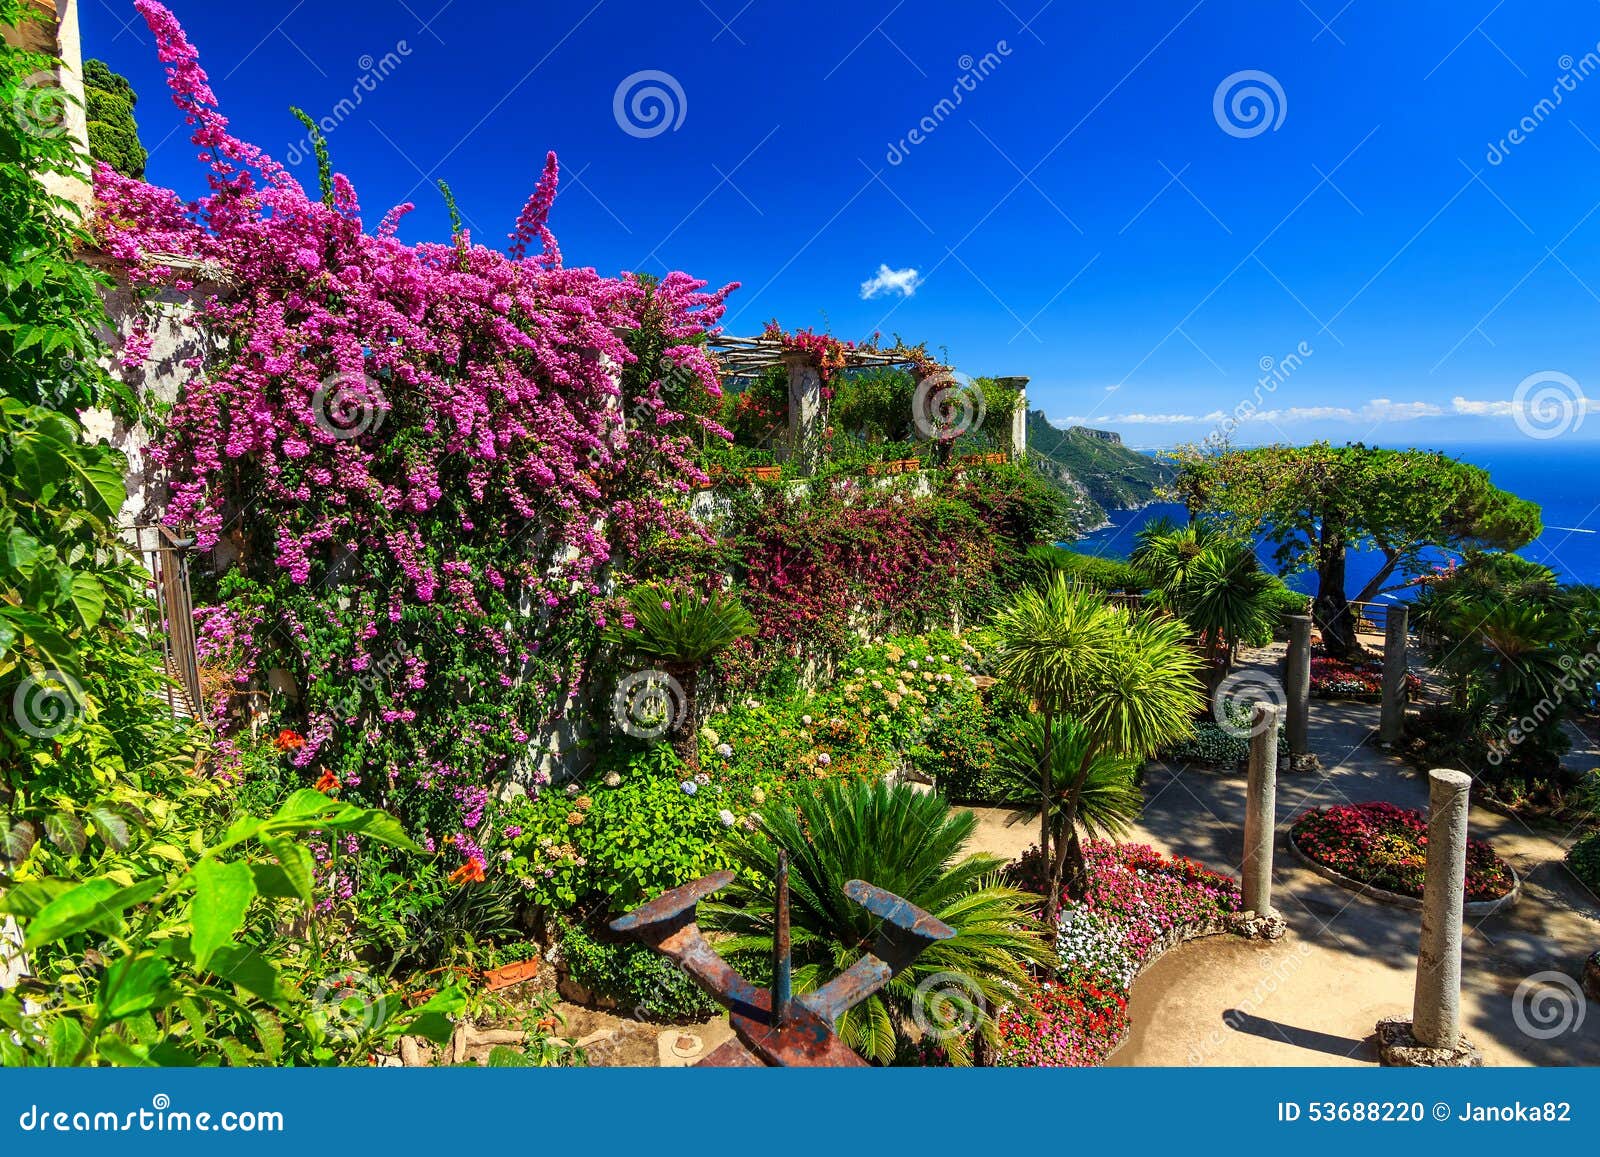 ornamental suspended garden,rufolo gardens,ravello,amalfi coast,italy,europe